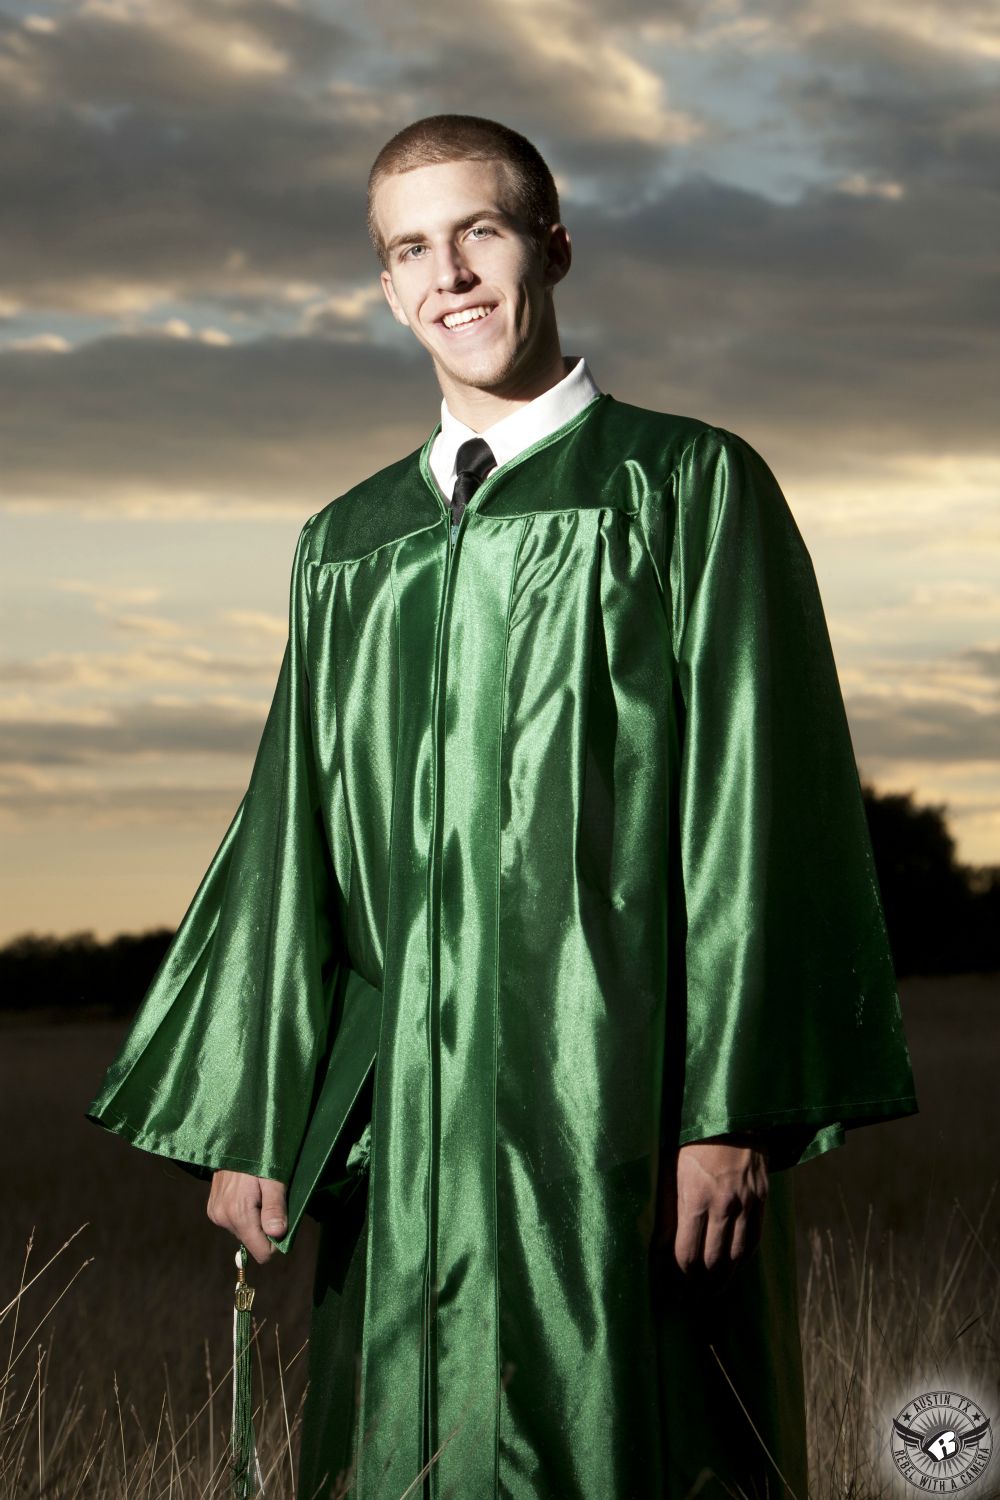 Rustic Texas high school graduation pictures of graduate in green graduation gown.